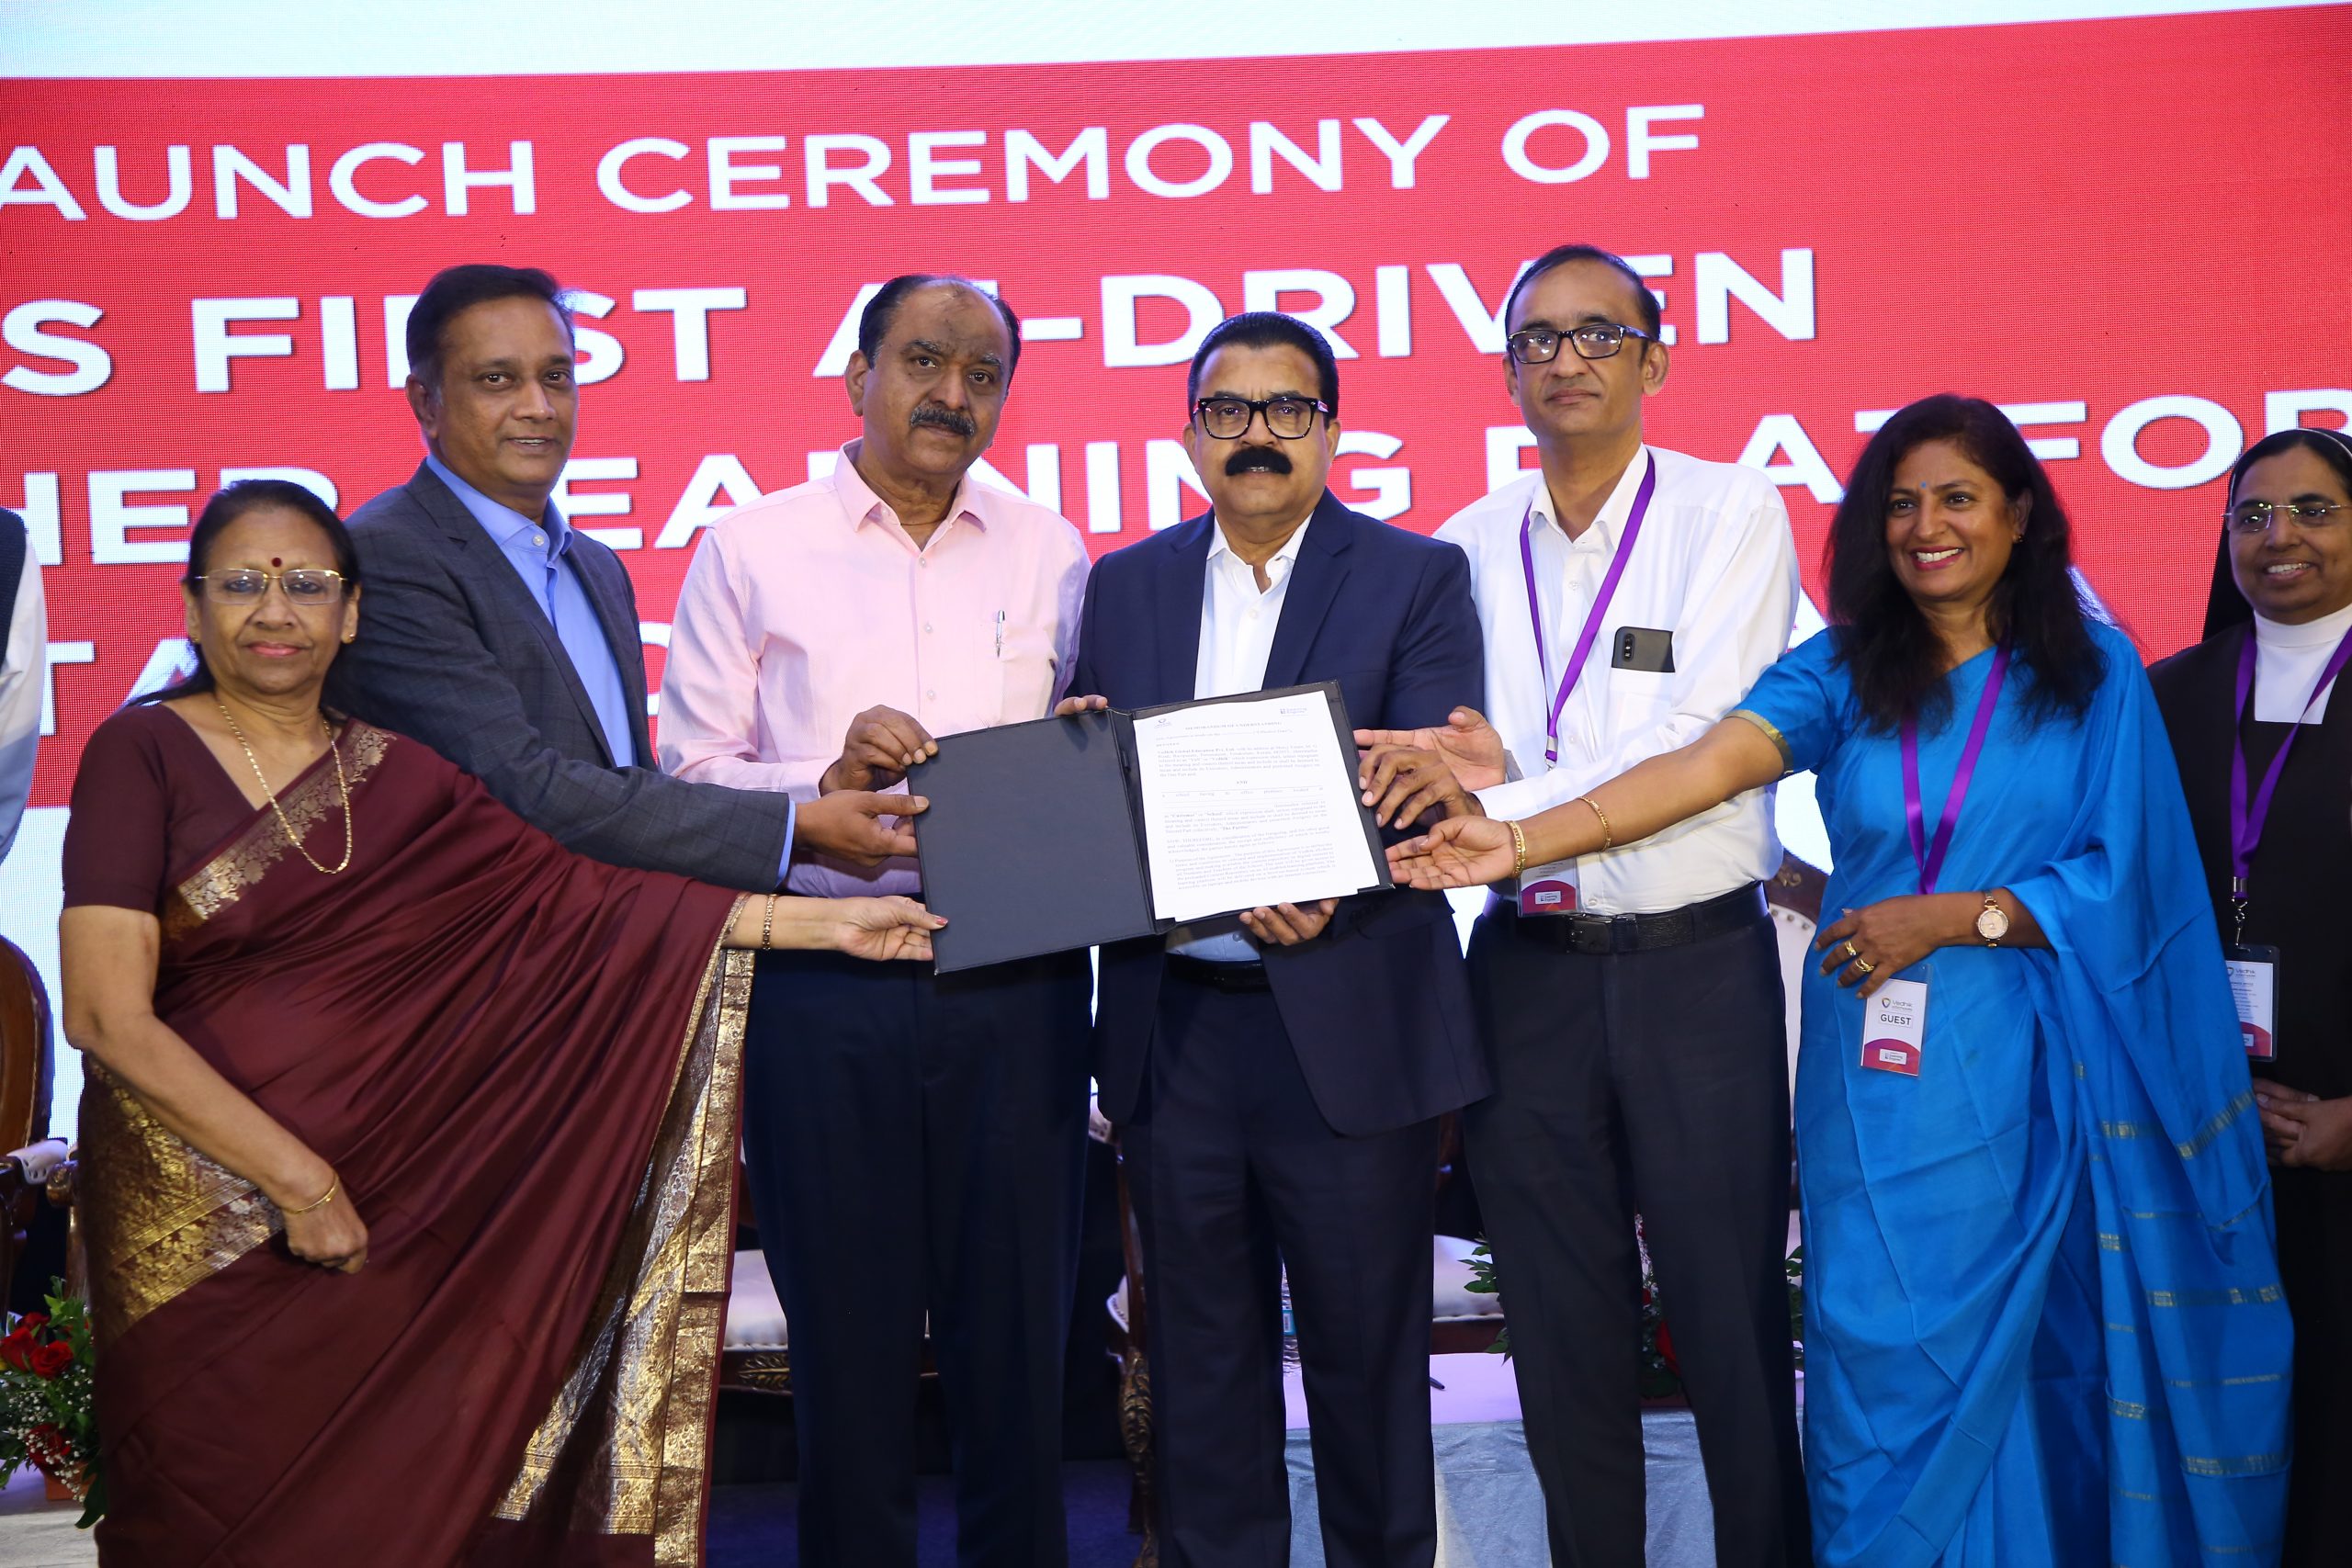 Vedhik eSchools Launch, Karnataka – 11 February 2023